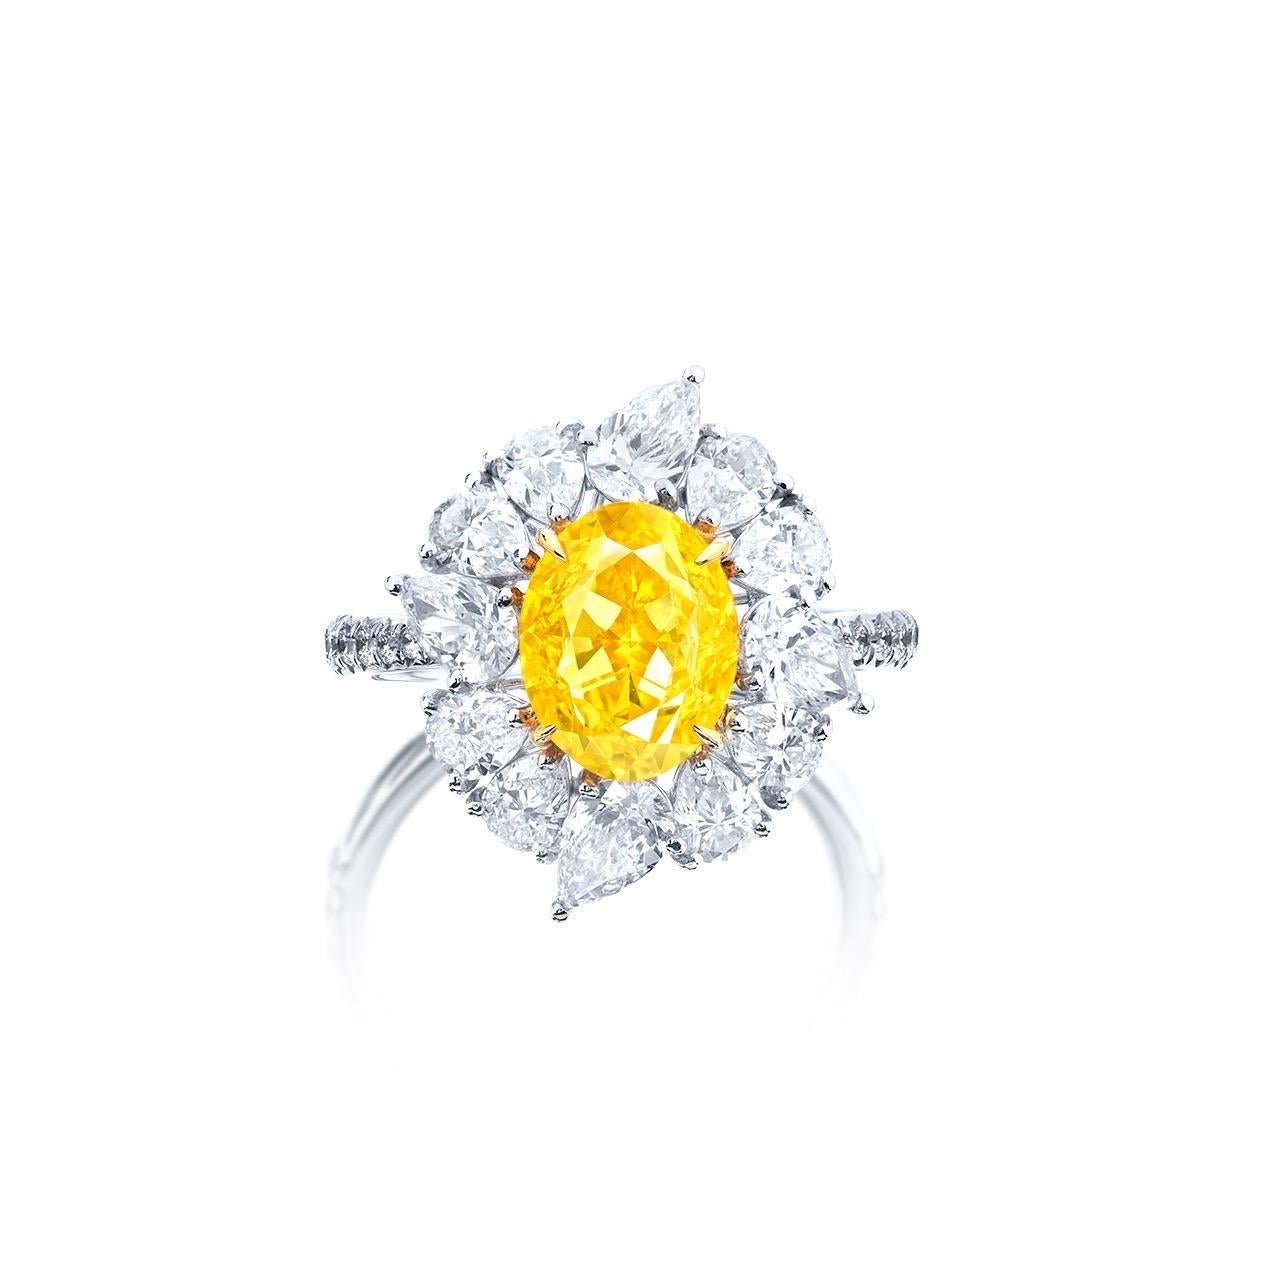 Oval Cut Emilio Jewelry Gia Certified 3.00Carat Flawless Vivid Oval Yellow Diamond For Sale